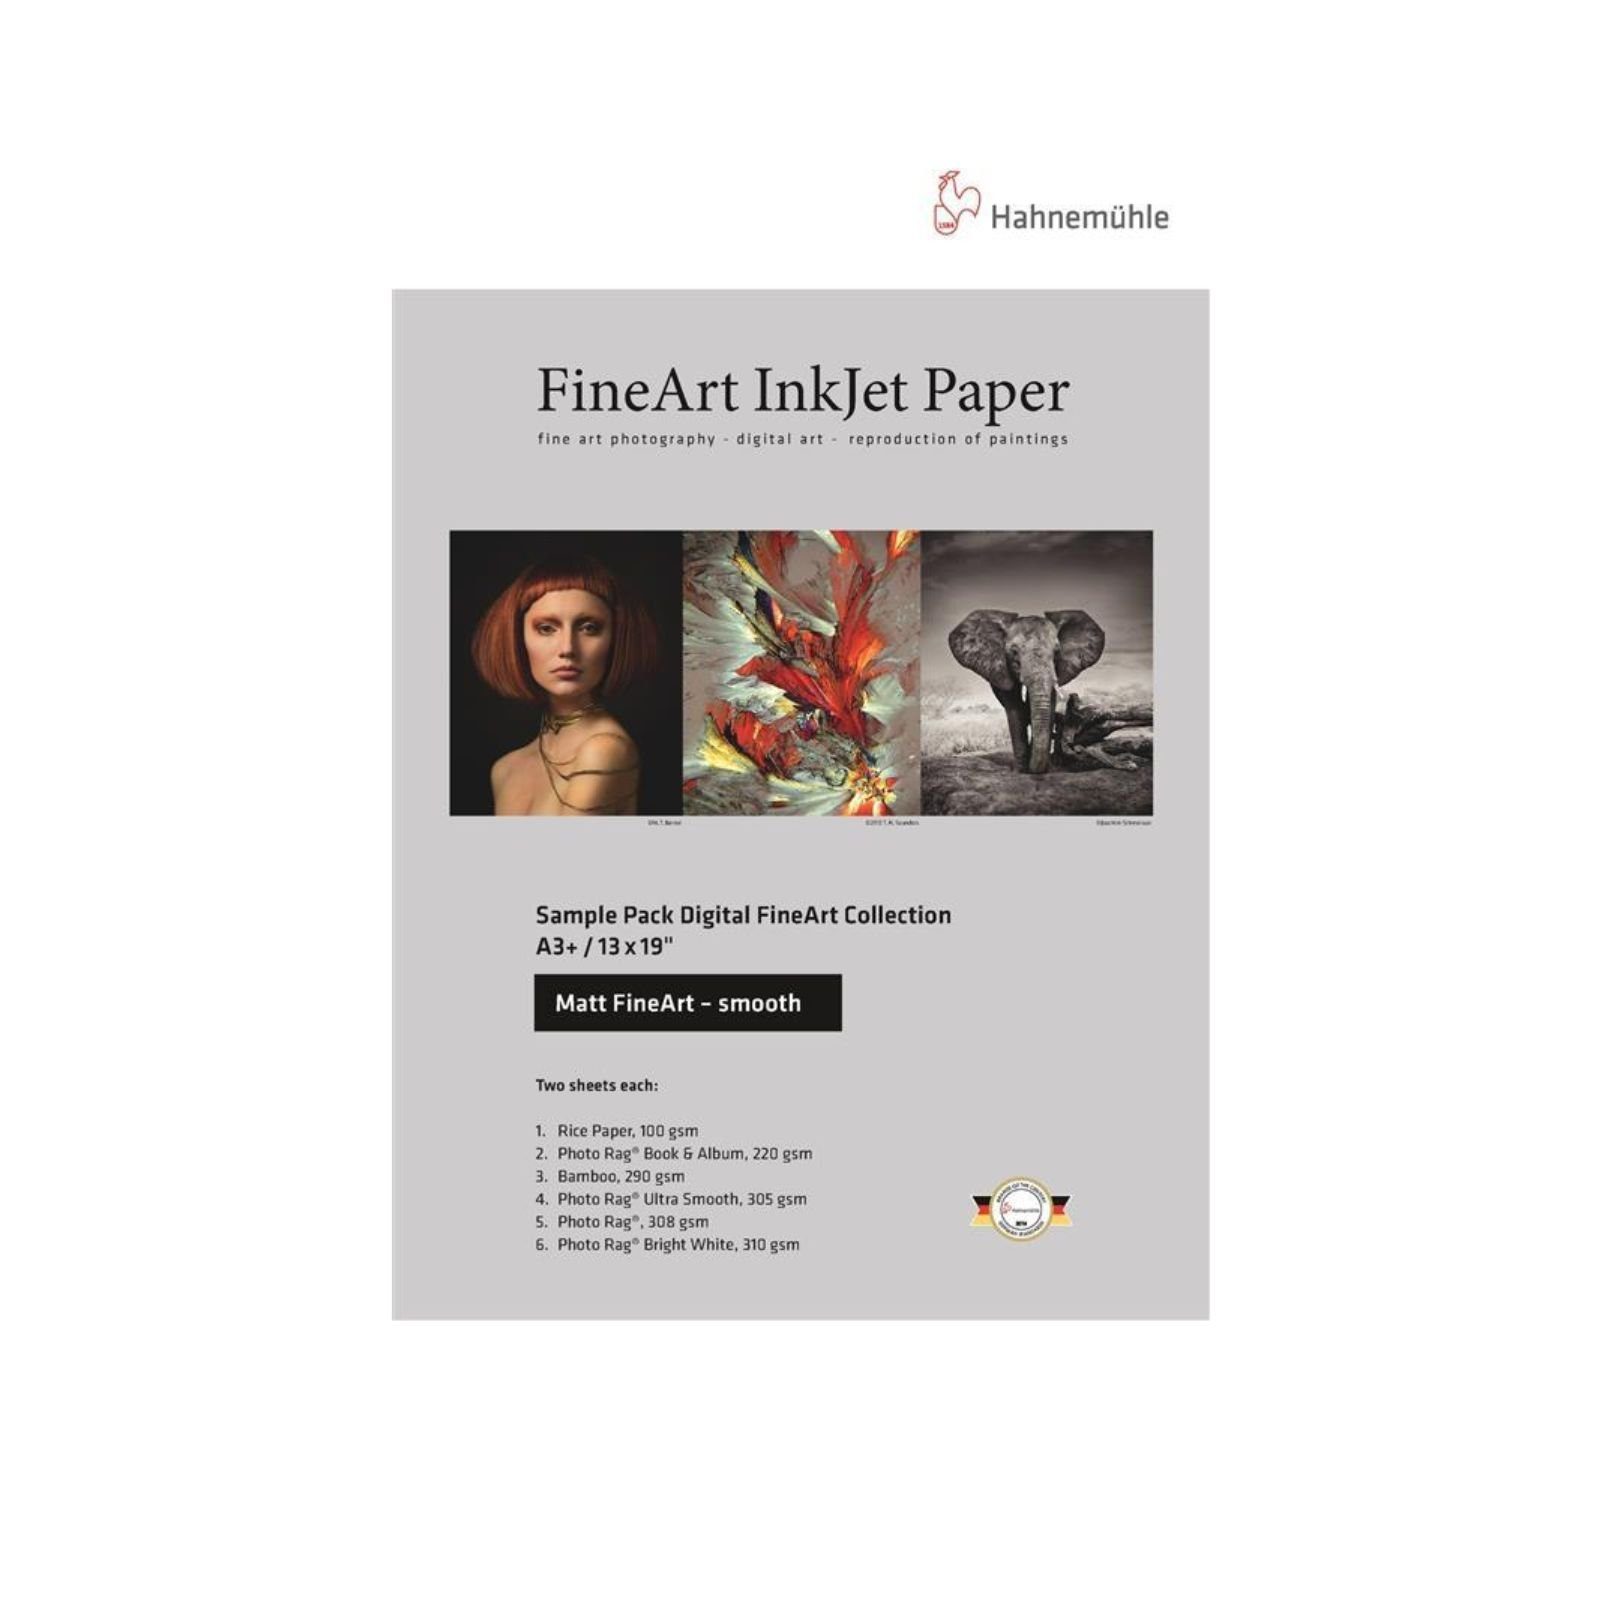 Hahnemühle Fotopapier Sample Pack Matt FineArt Smooth Inkjet-Papier - DIN A3+ - 6 Qualitäten